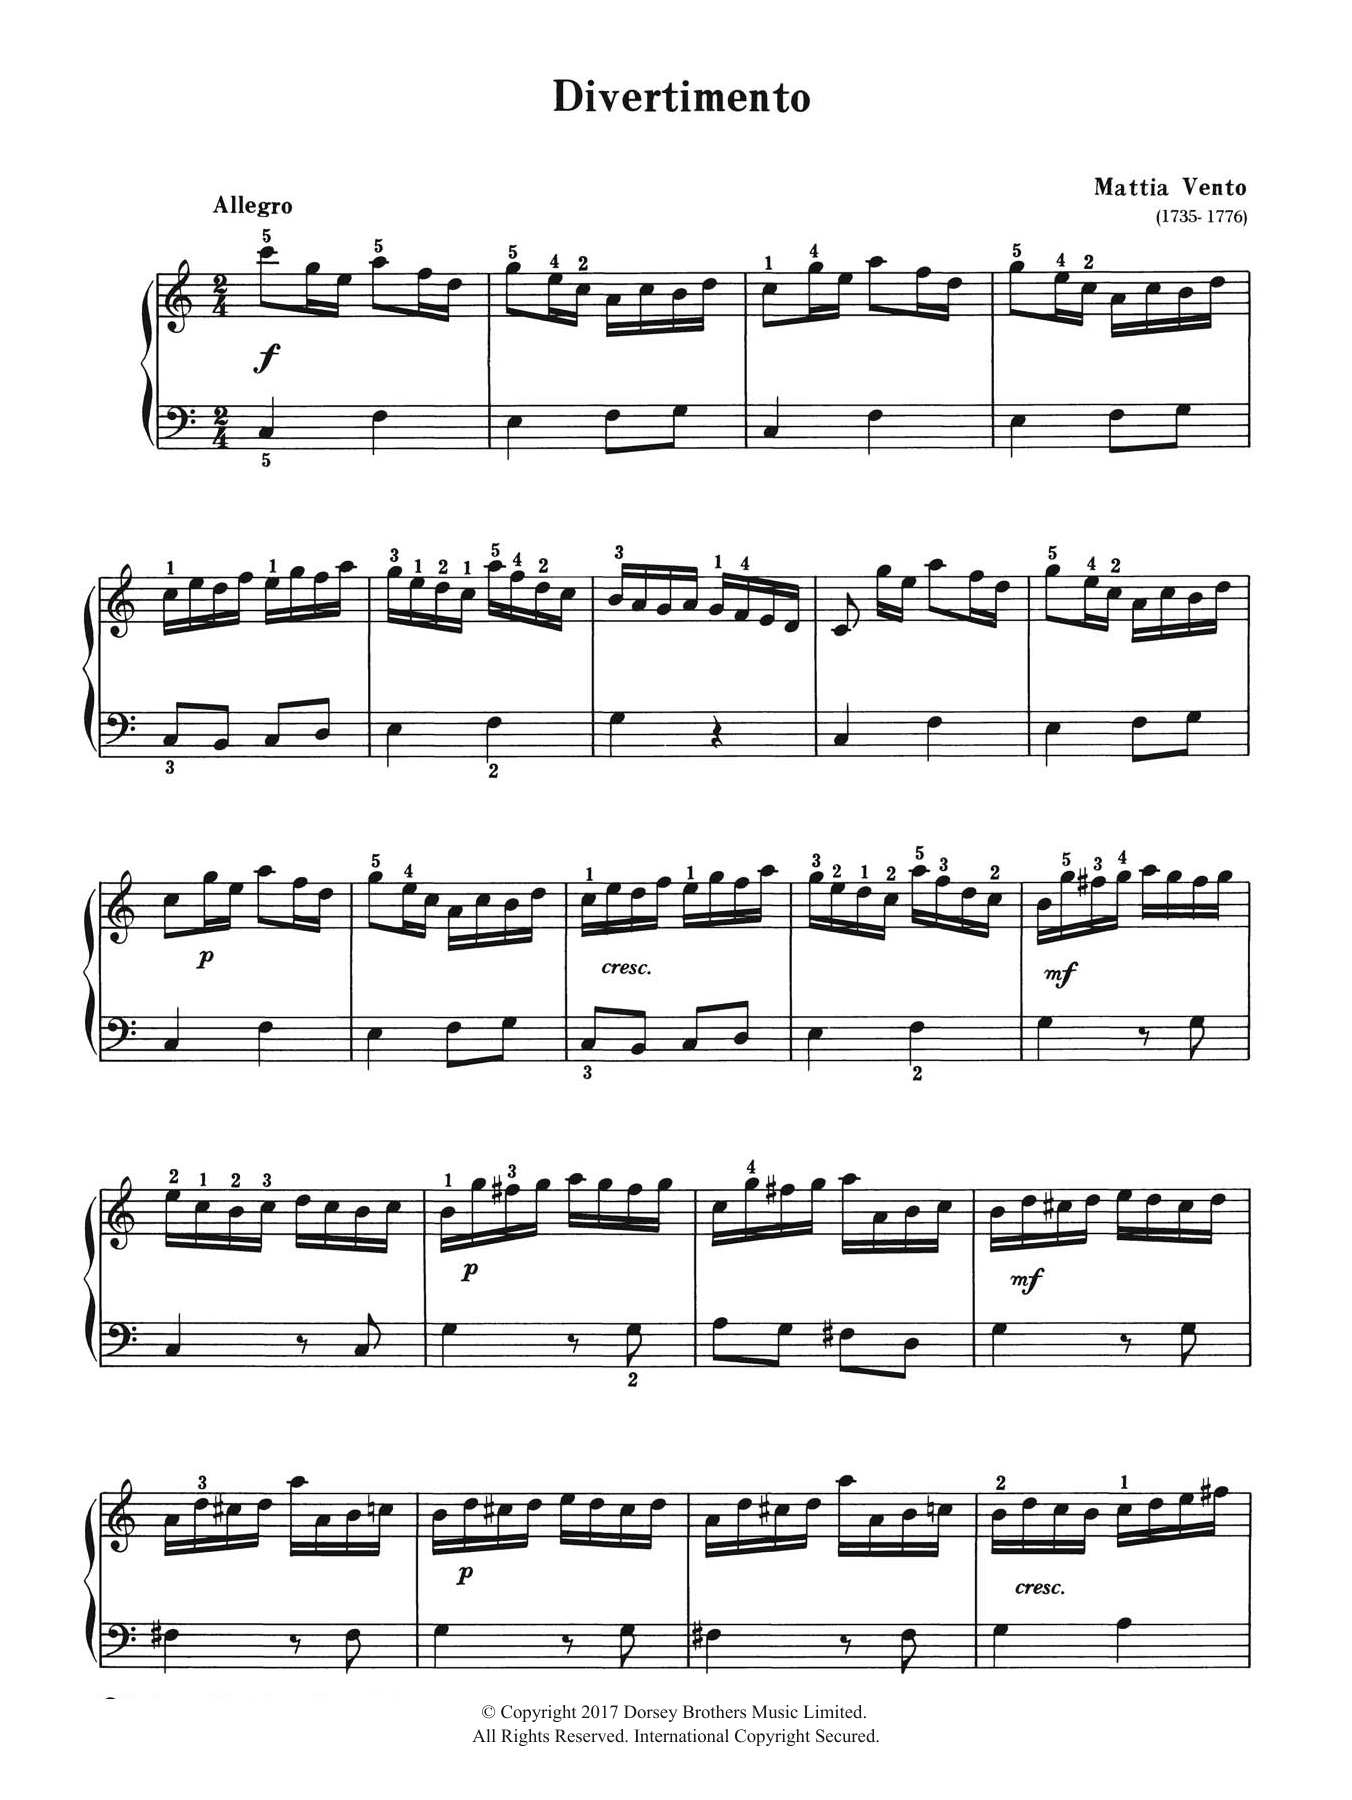 Mattia Vento Divertimento sheet music notes and chords arranged for Piano Solo